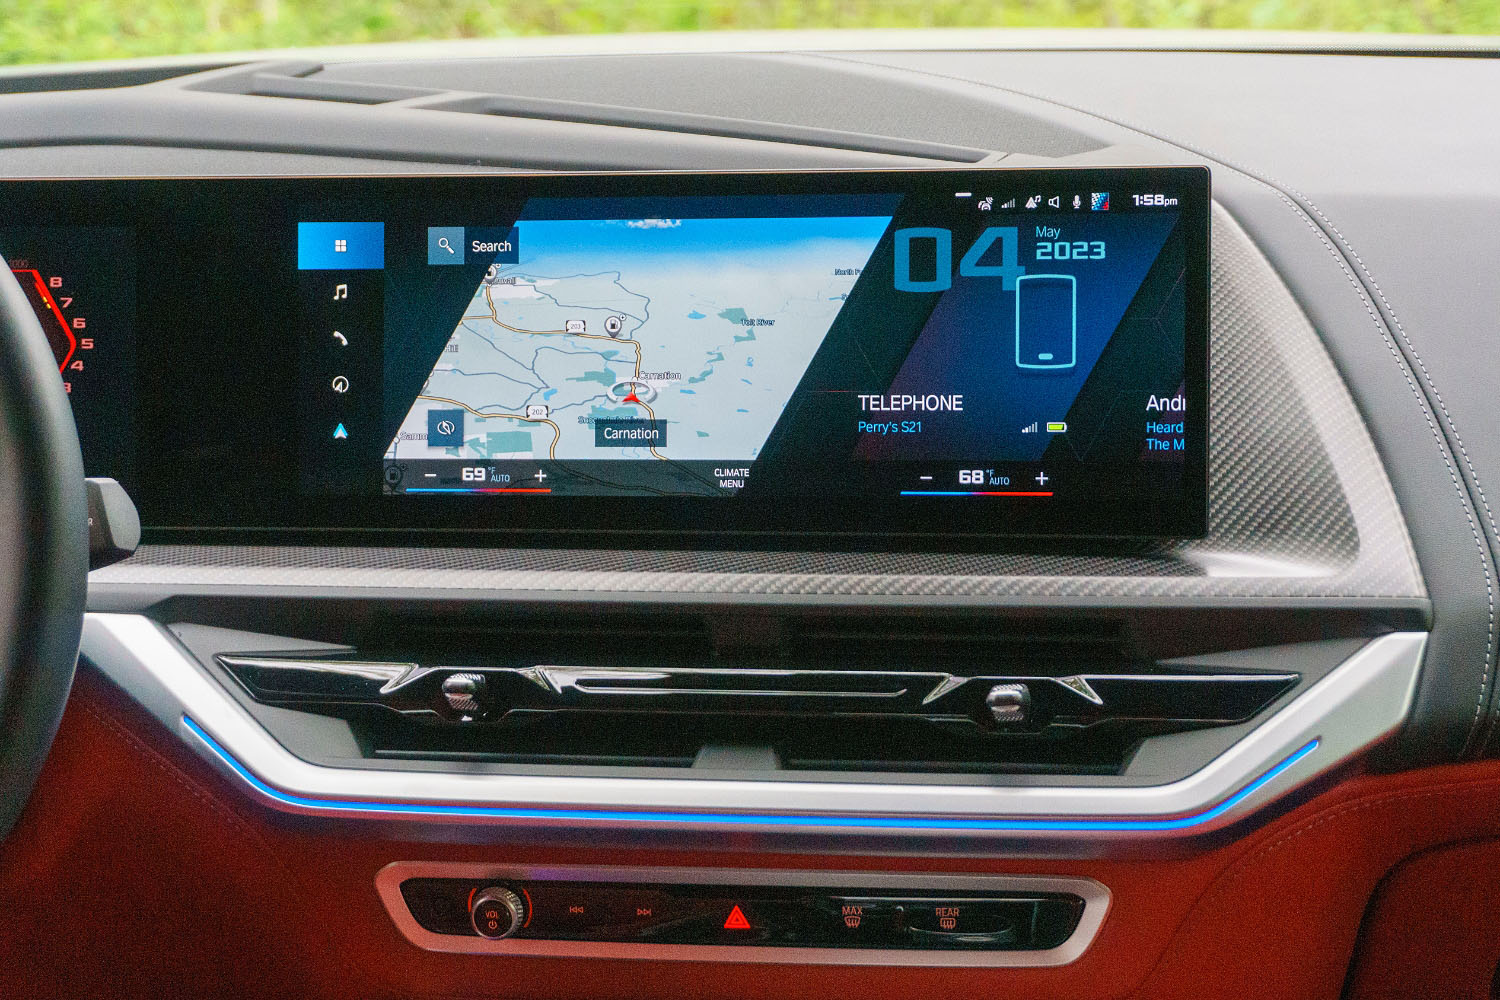 2023 BMW XM iDrive 8 infotainment screen